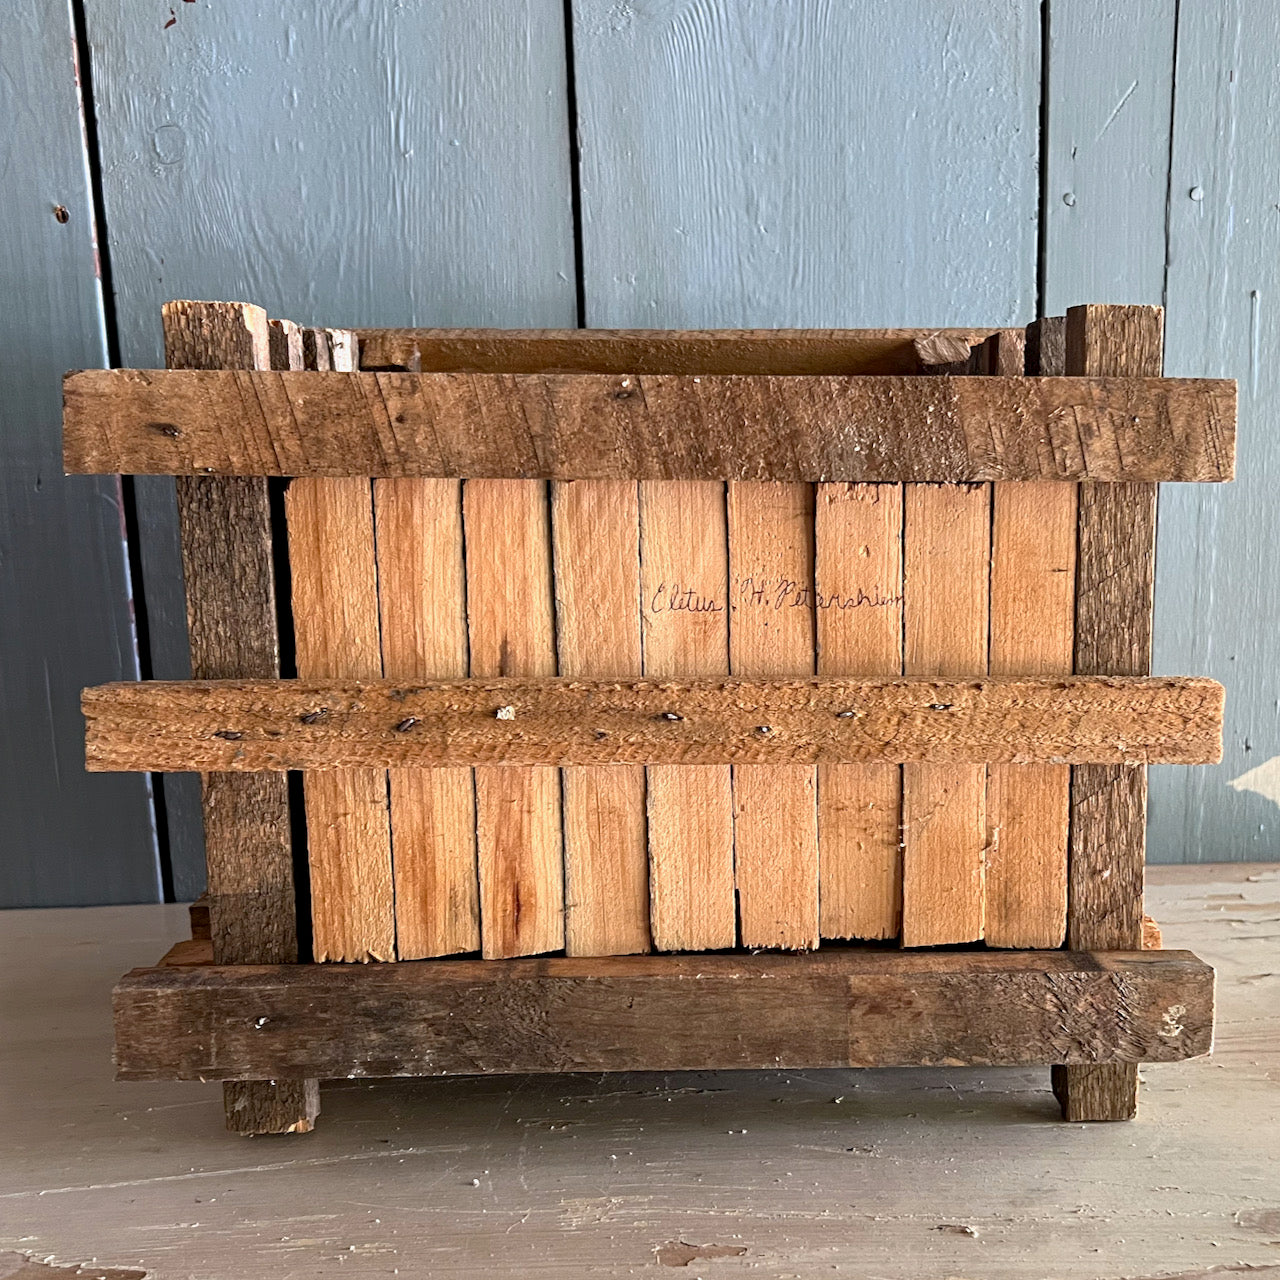 Rustic Handbuilt Amish Toy Log Cabin